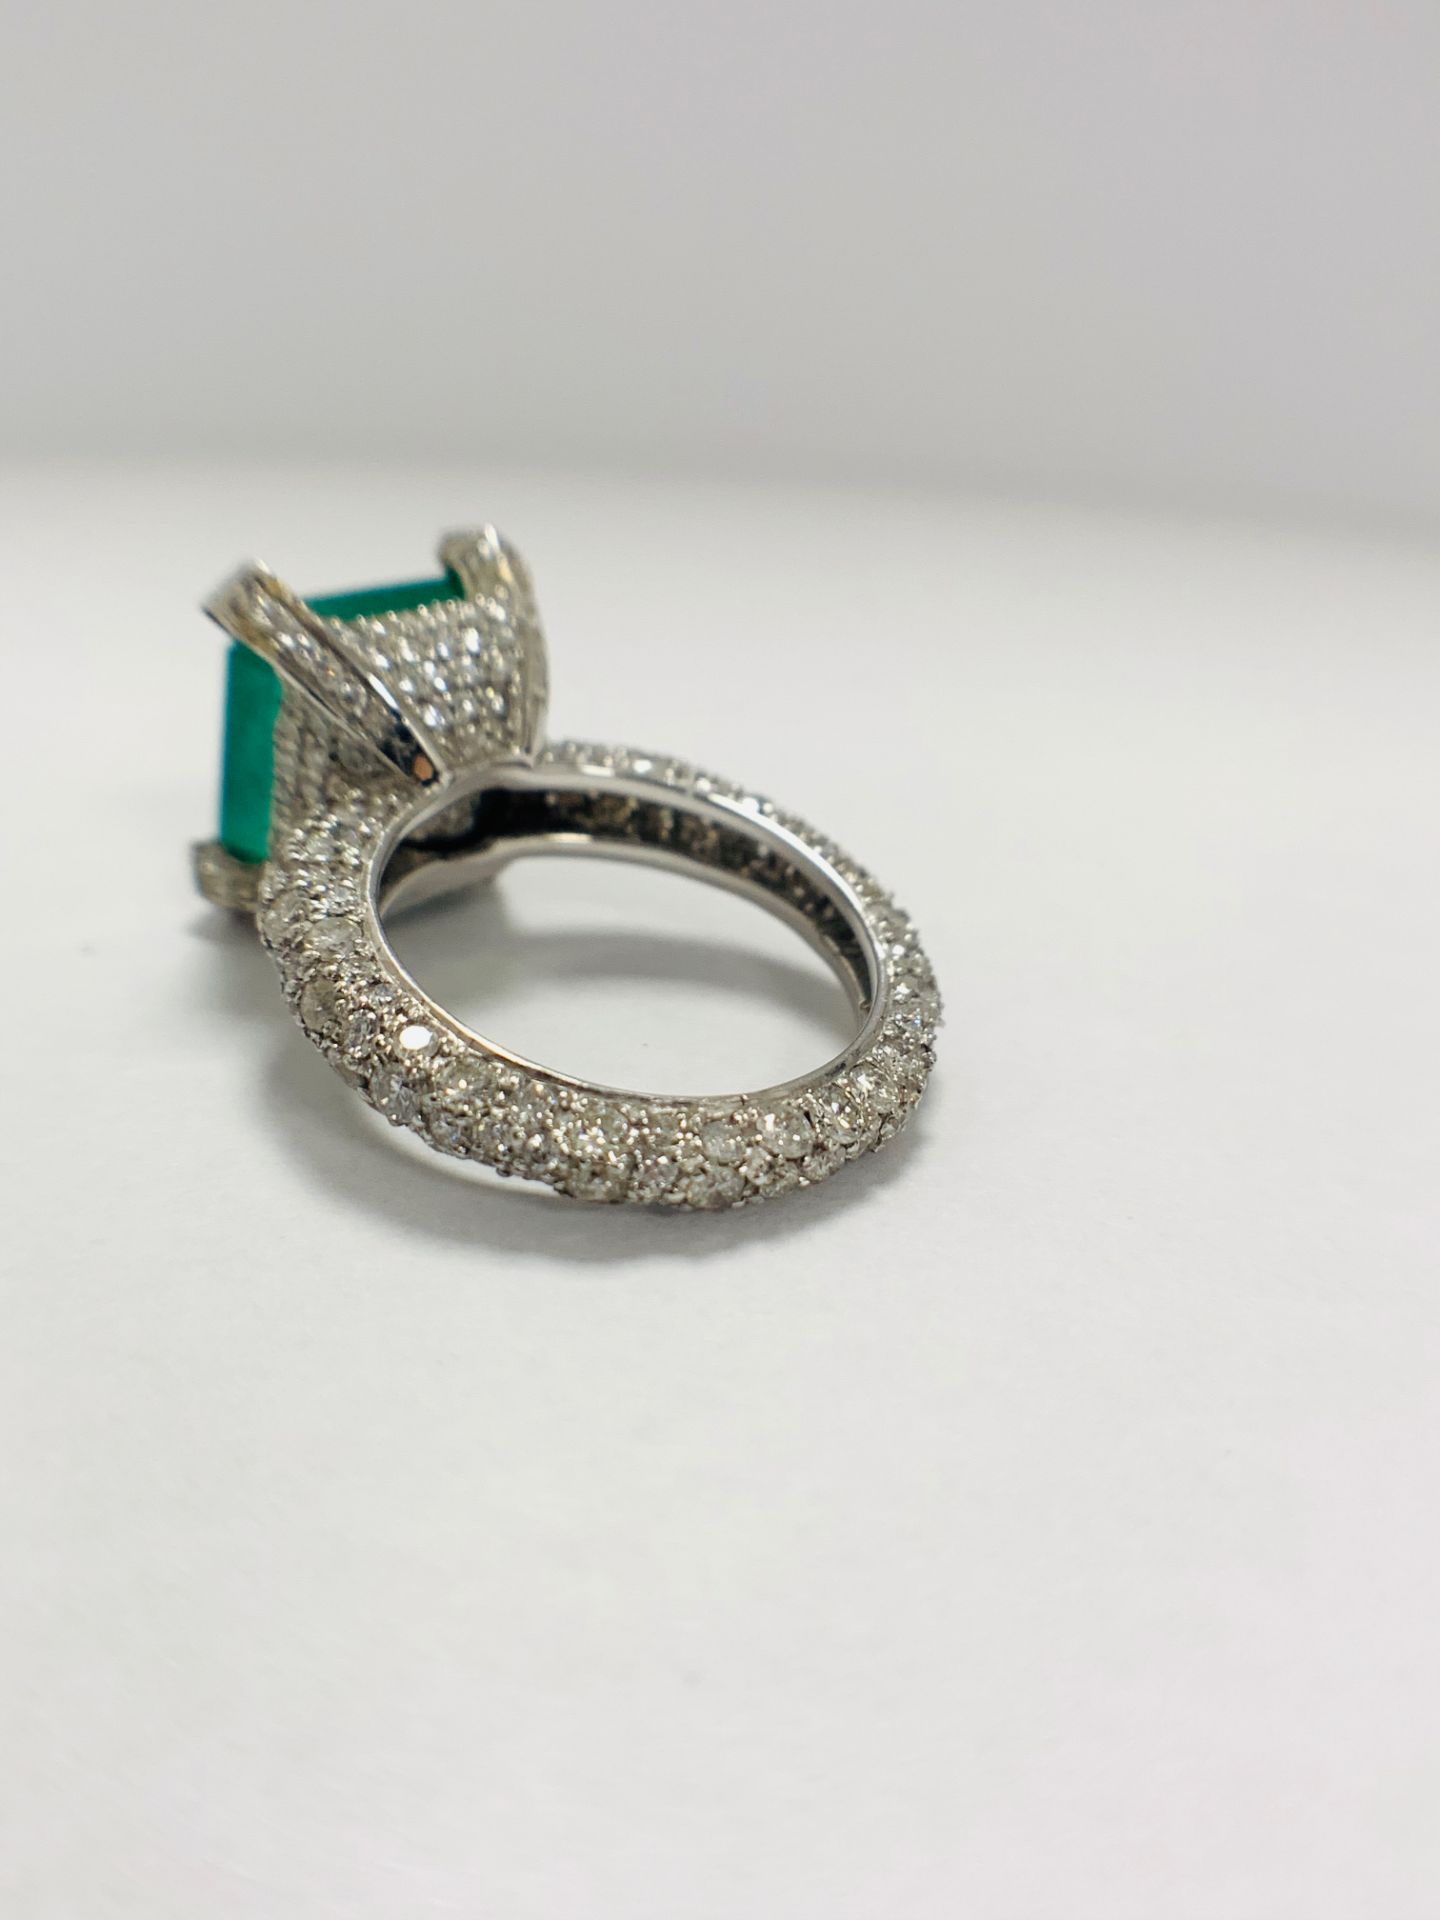 Platinum Emerald and Diamond ring - Image 6 of 17